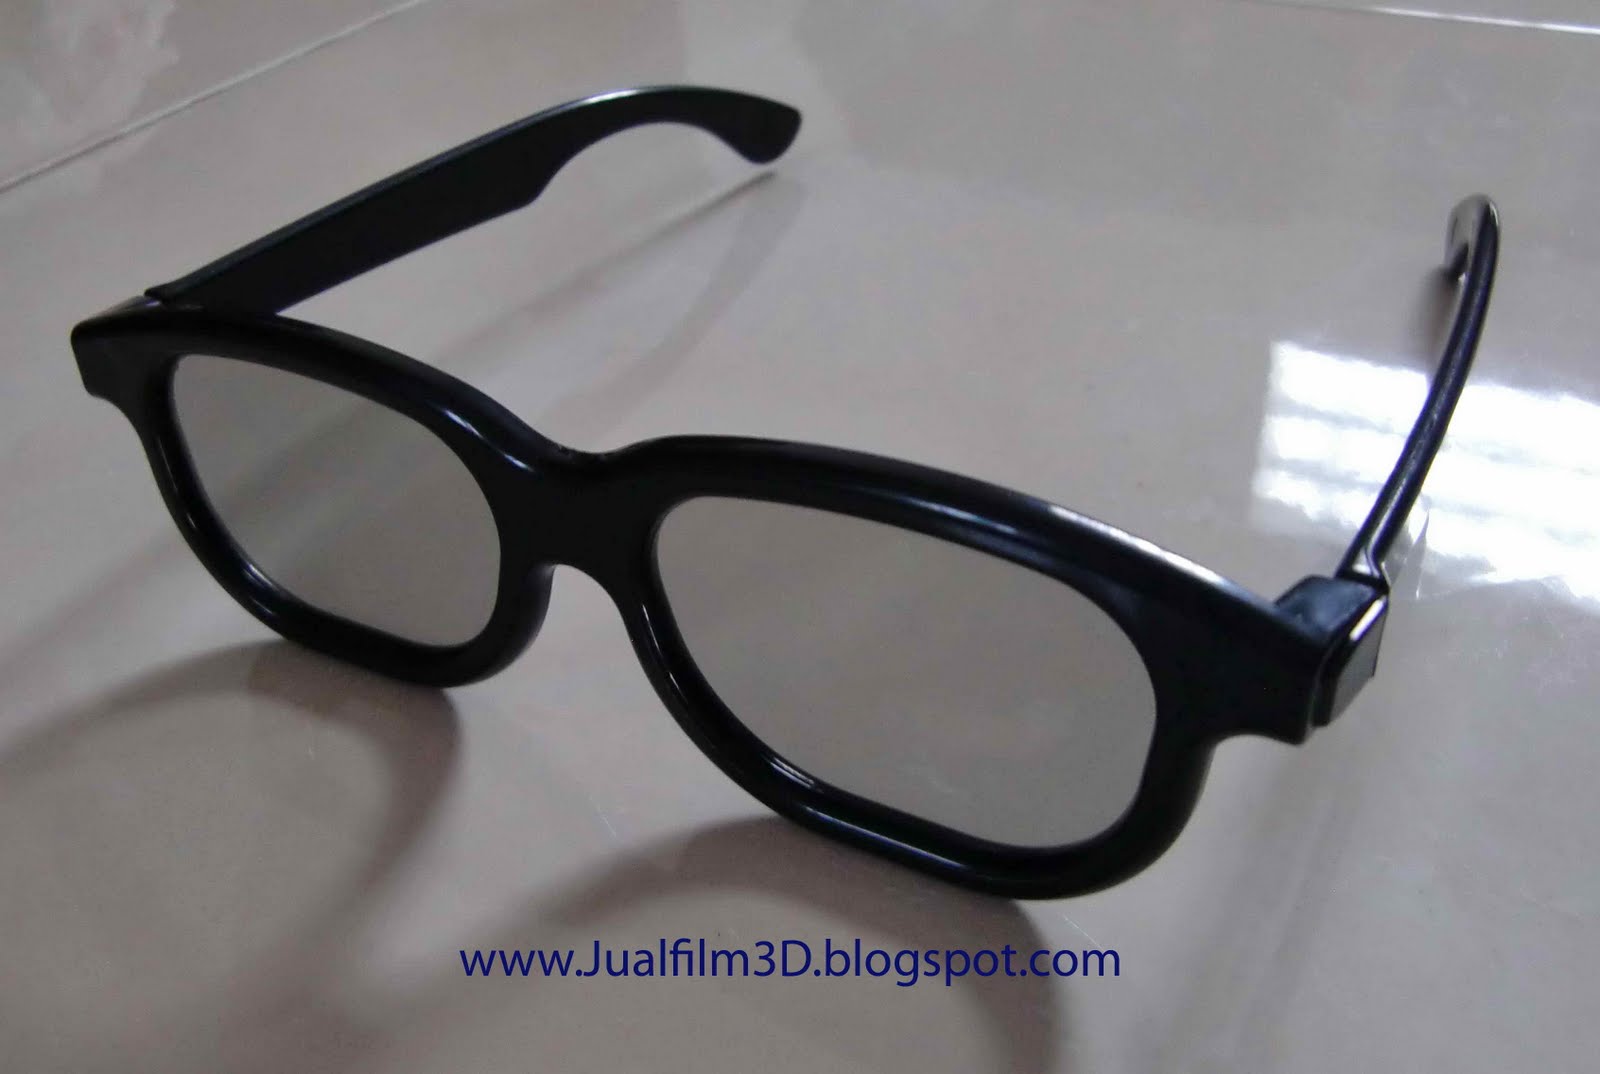 Jual DVD Film 3 Dimensi: Kacamata 3D Linear POLARIZED